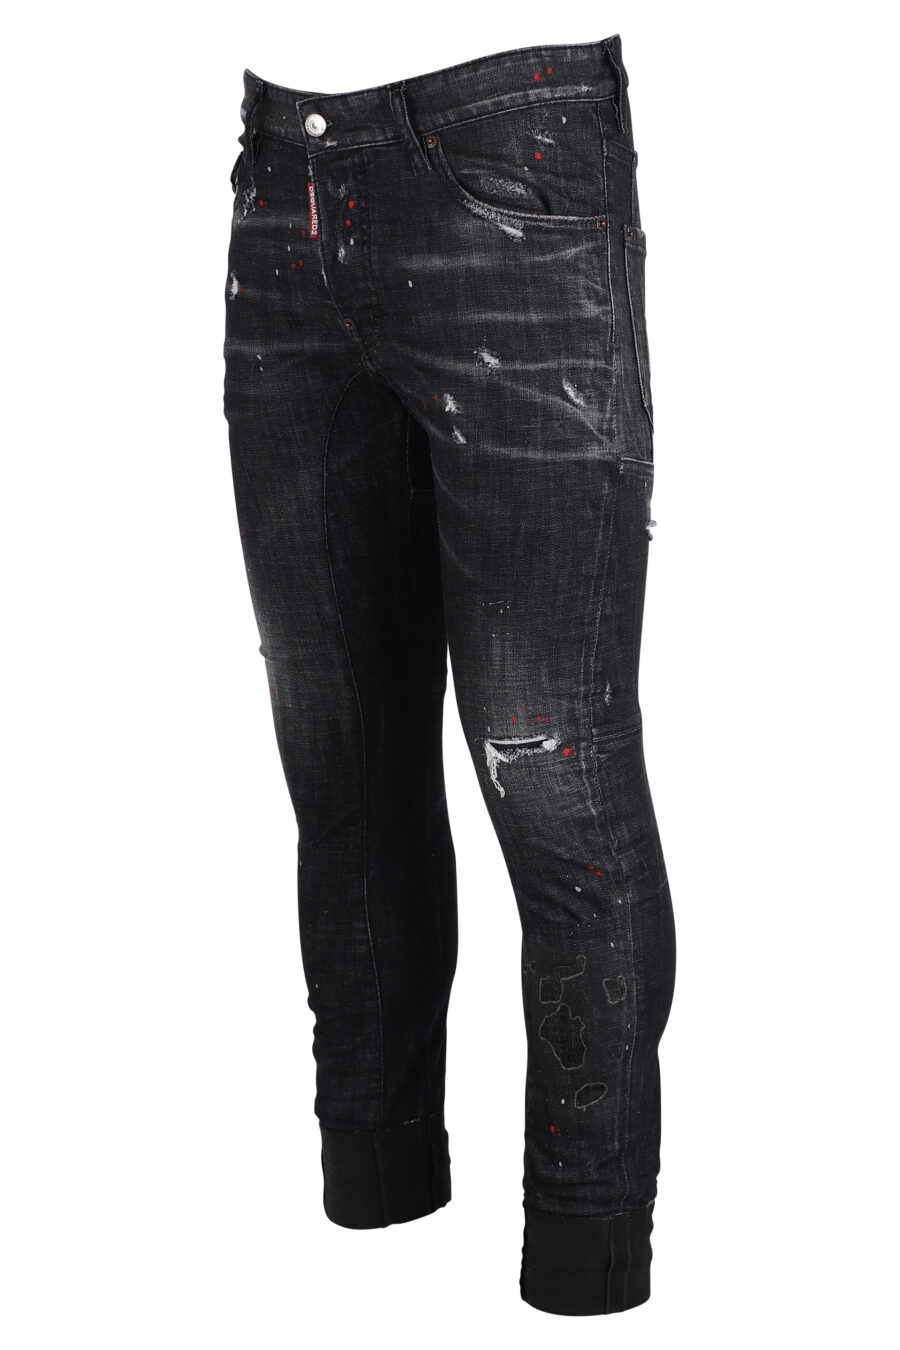 Dsquared2 - Black tidy biker jeans - BLS Fashion